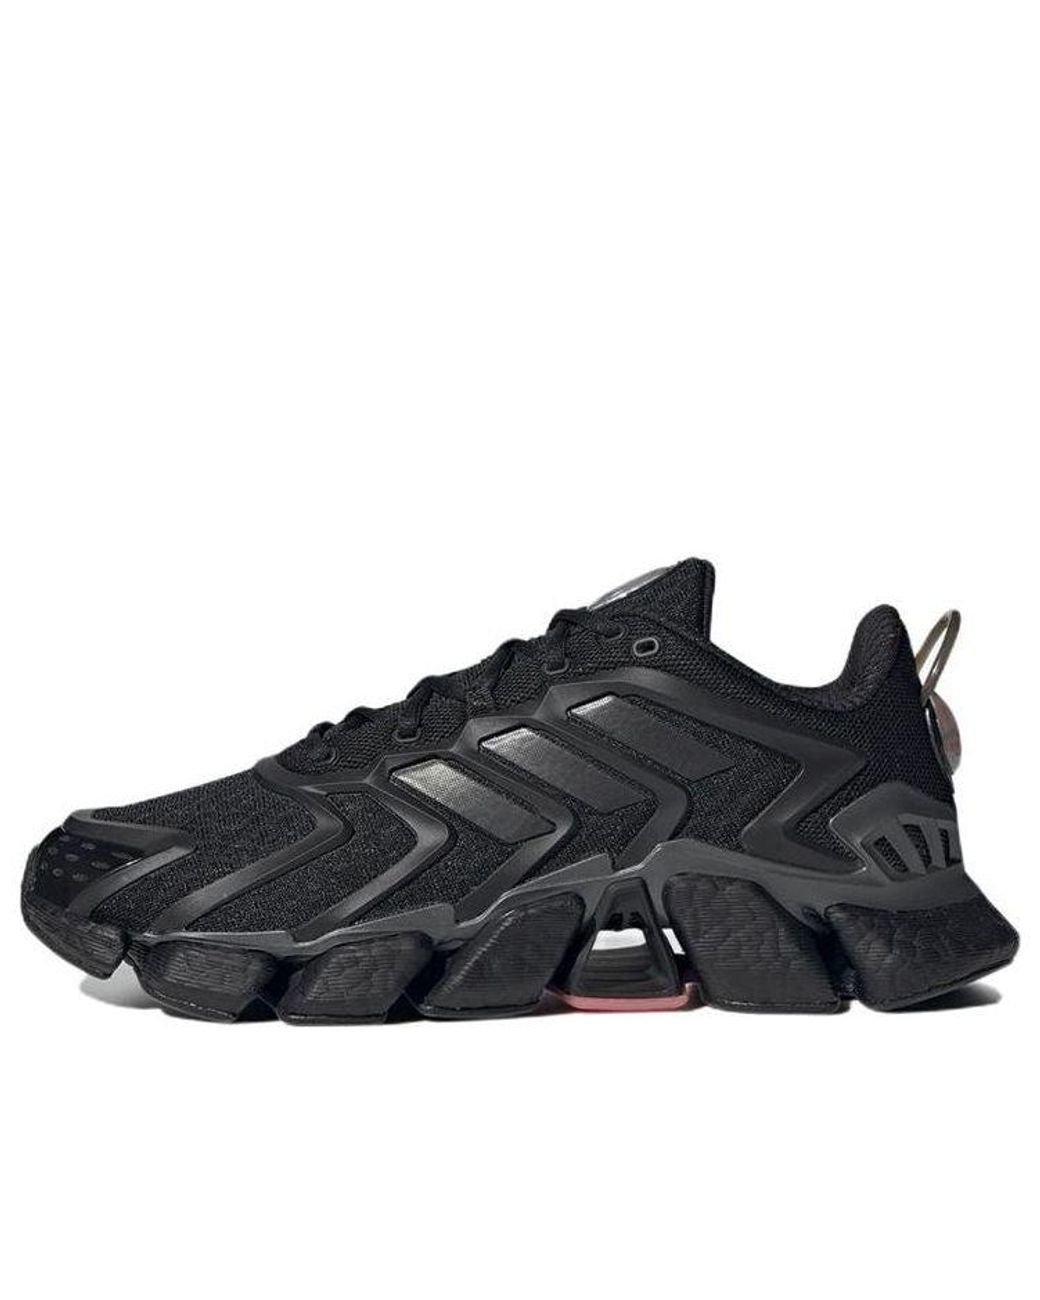 adidas Climacool Boost Shoes Men's, Black, Size 5